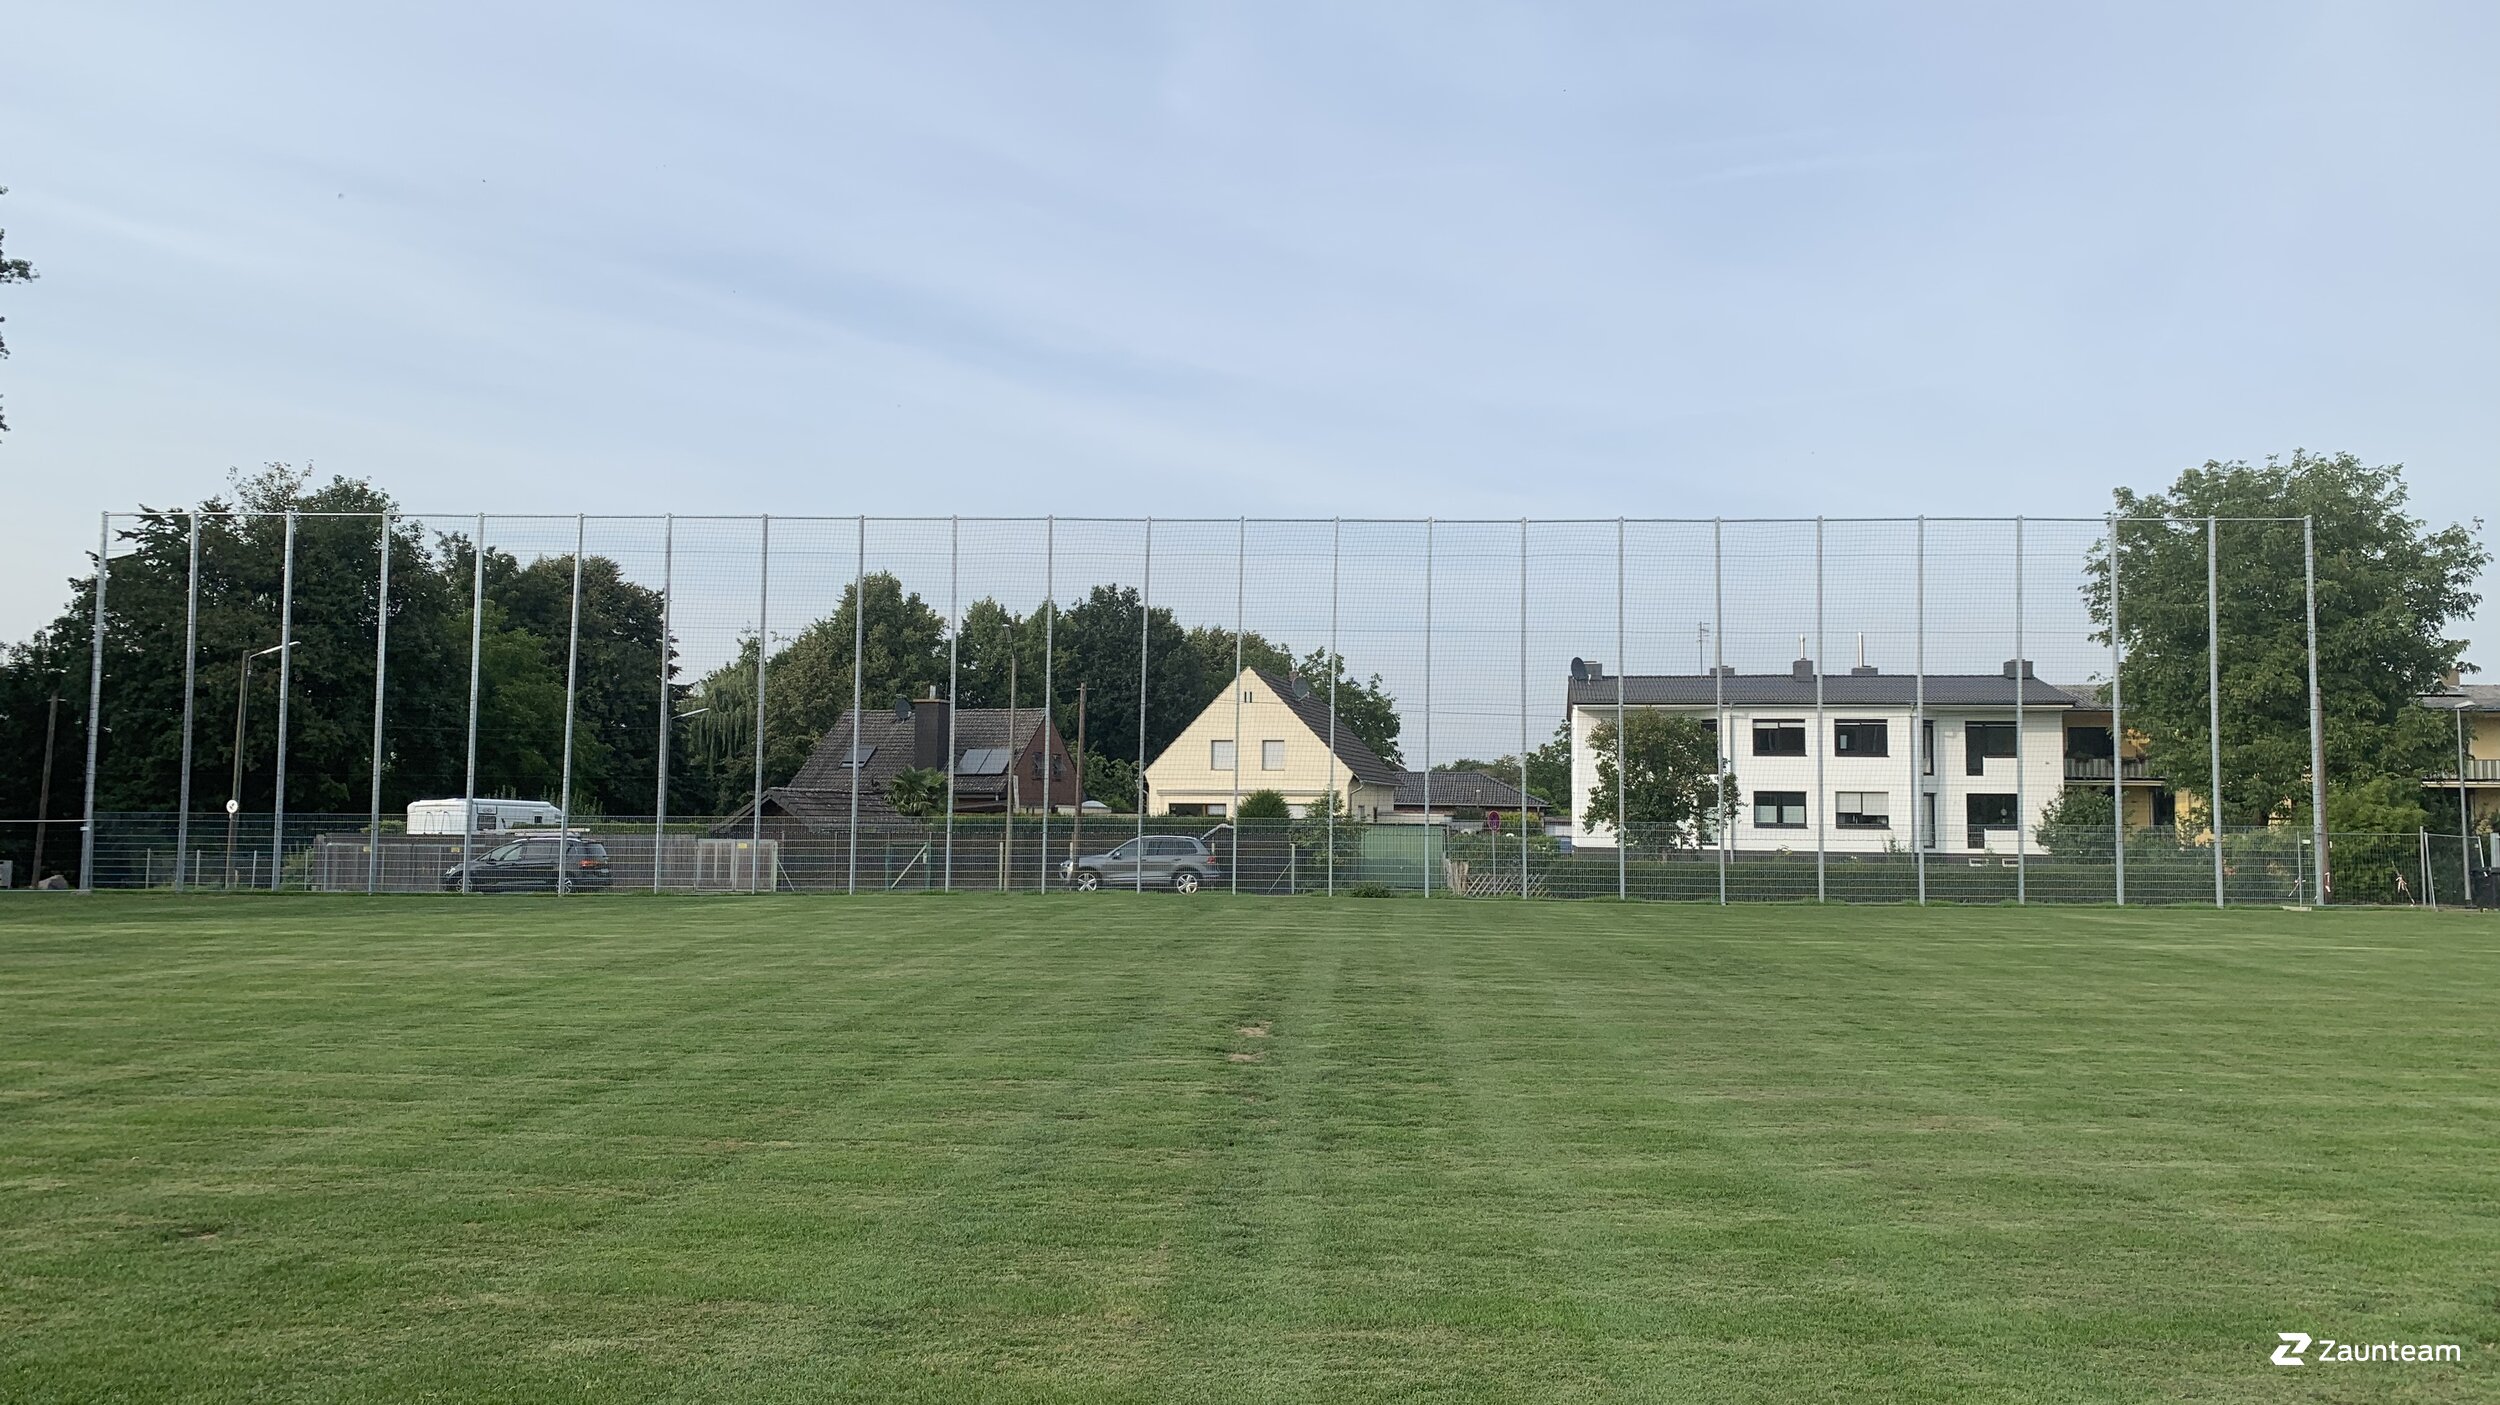 Clôture pare-ballon de 2019 à 50259 Pulheim Allemagne de Zaunteam Schönauen.